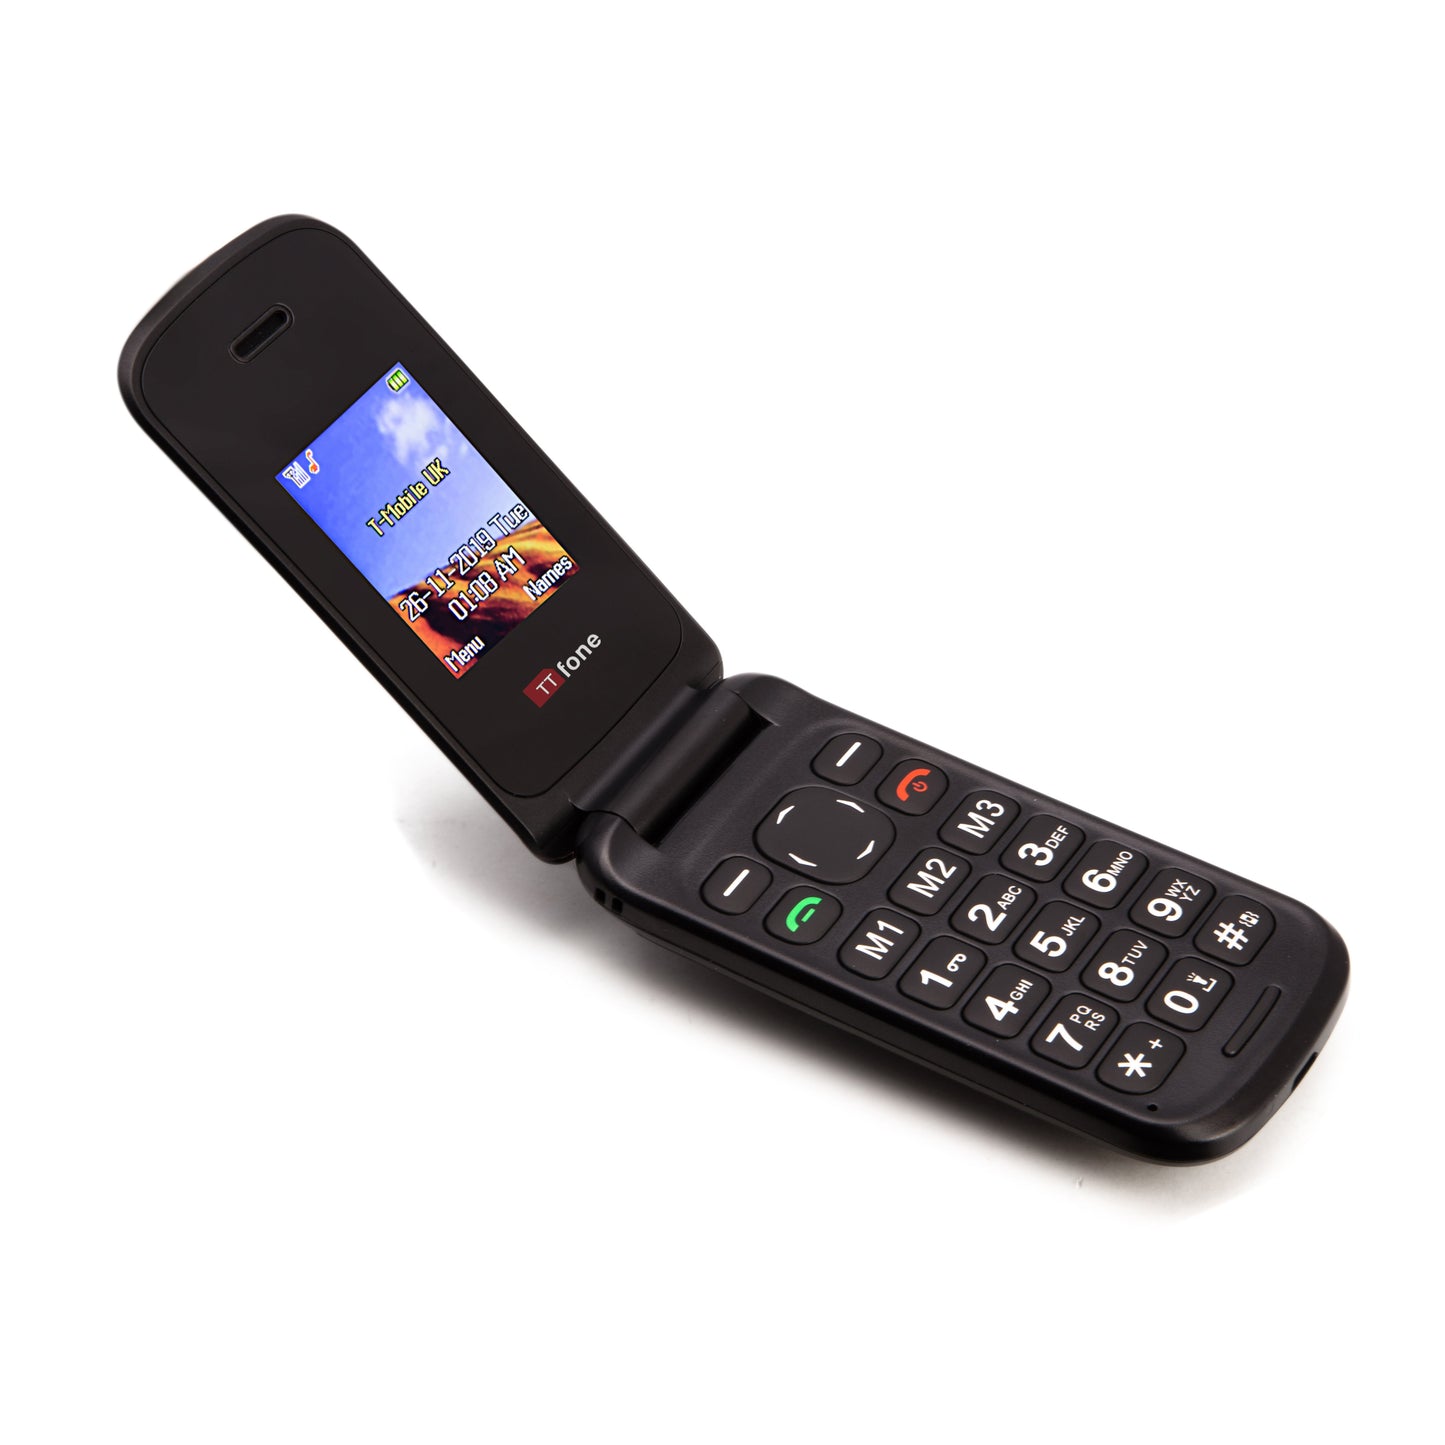 TTfone TT140 Red - Warehouse Deals Flip Folding Phone with Mains Charger